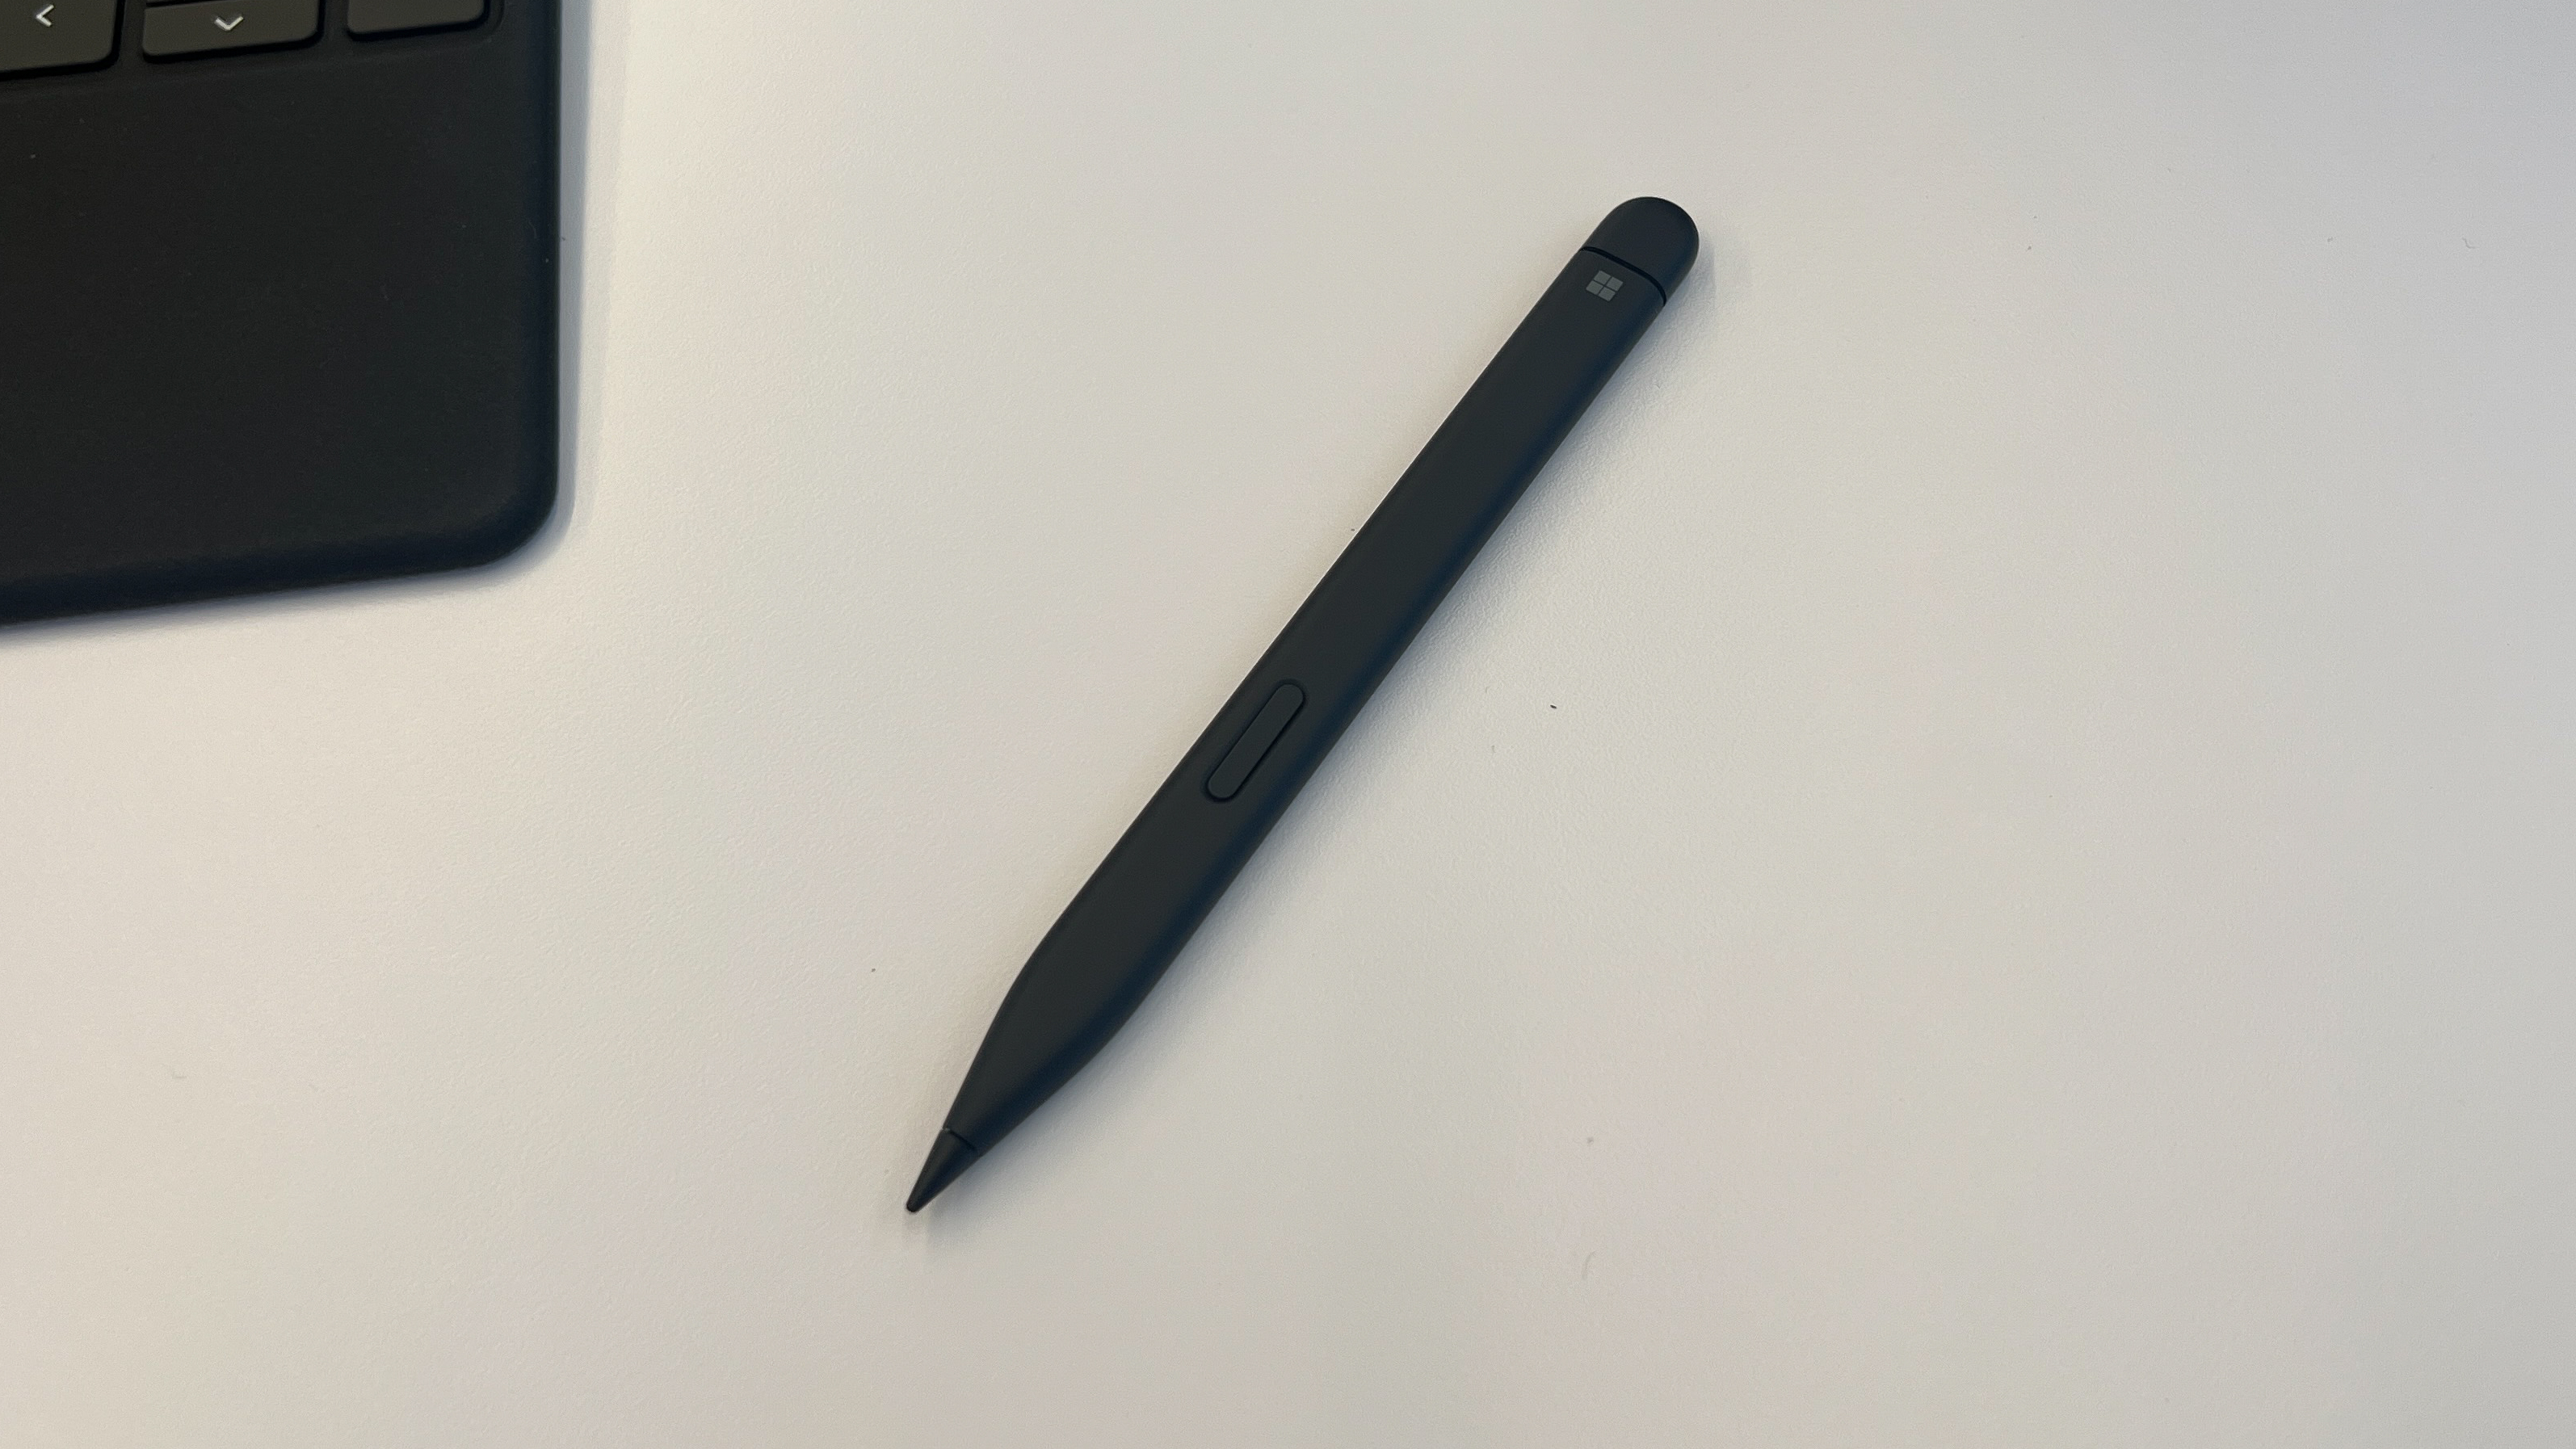 The Microsoft Surface Pro Smart Pen